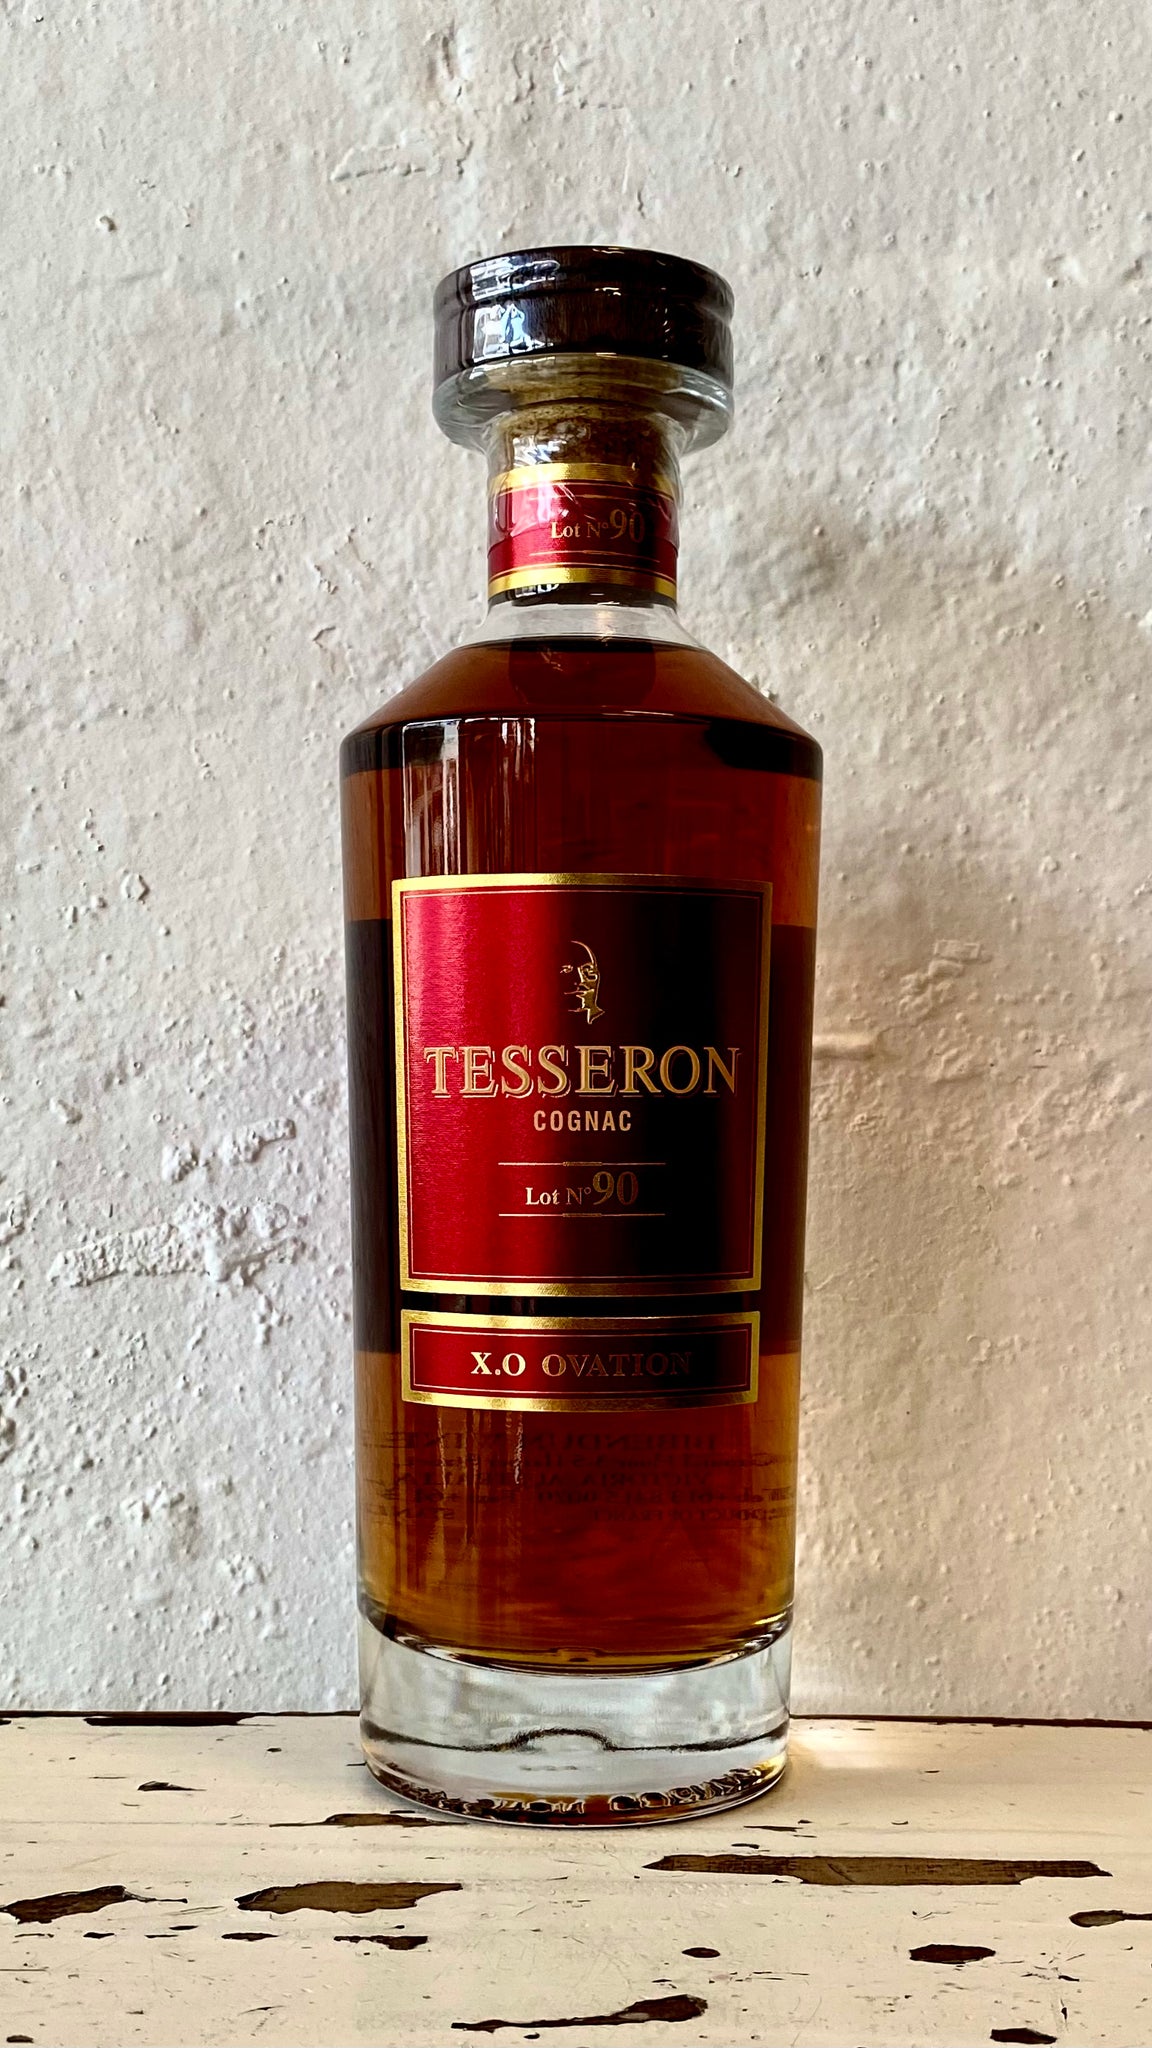 Tesseron Cognac Lot No 90 X.O Ovation